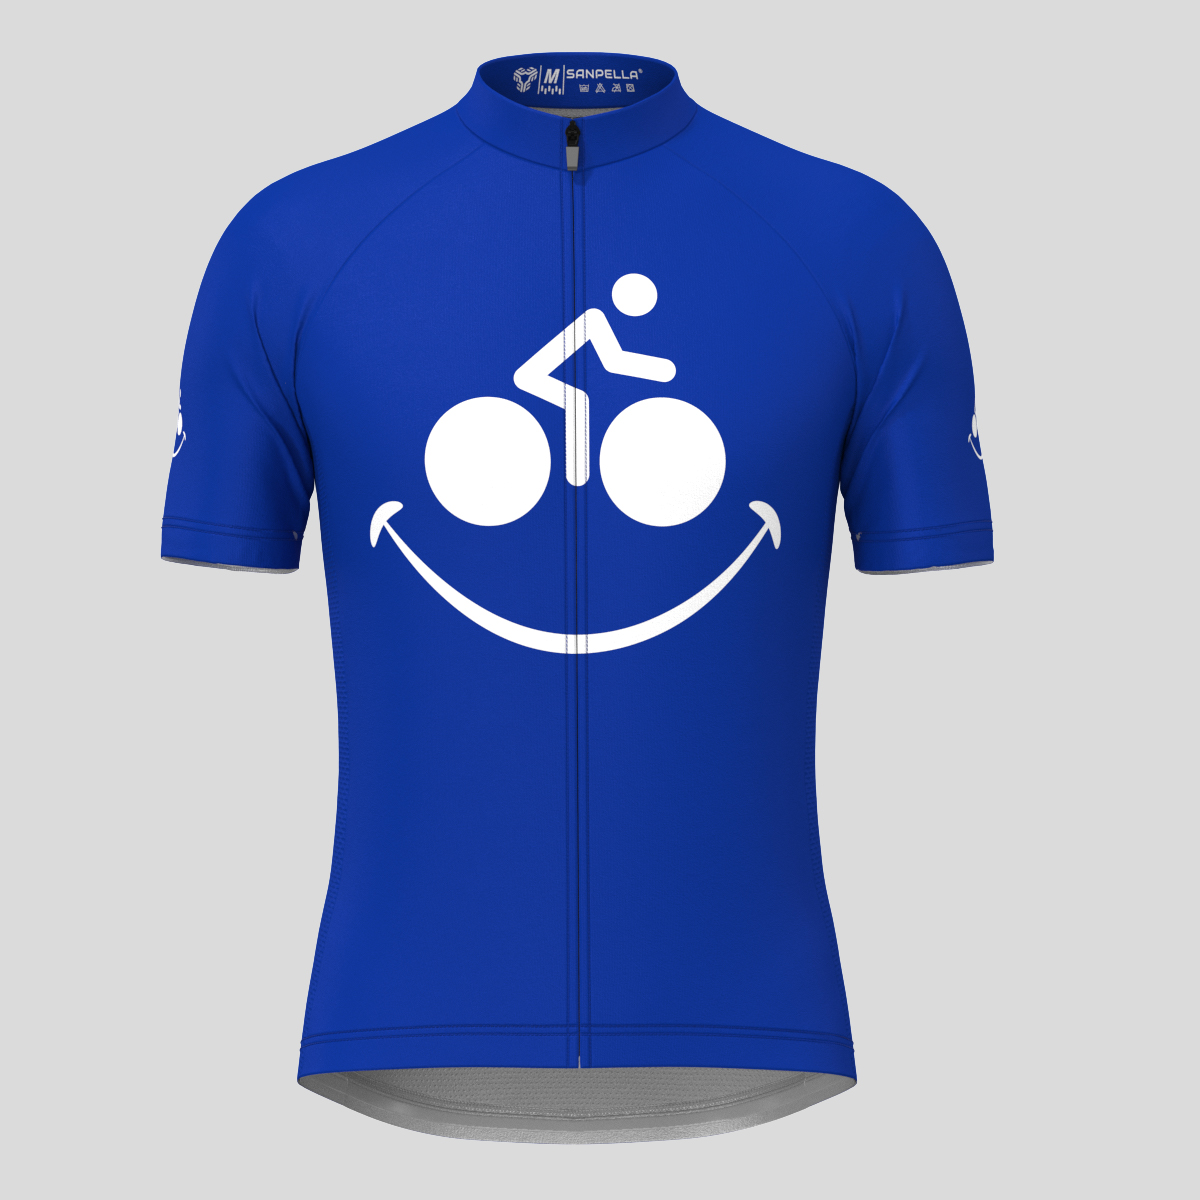 Bike Smile Men's Cycling Jersey - Racing Blue